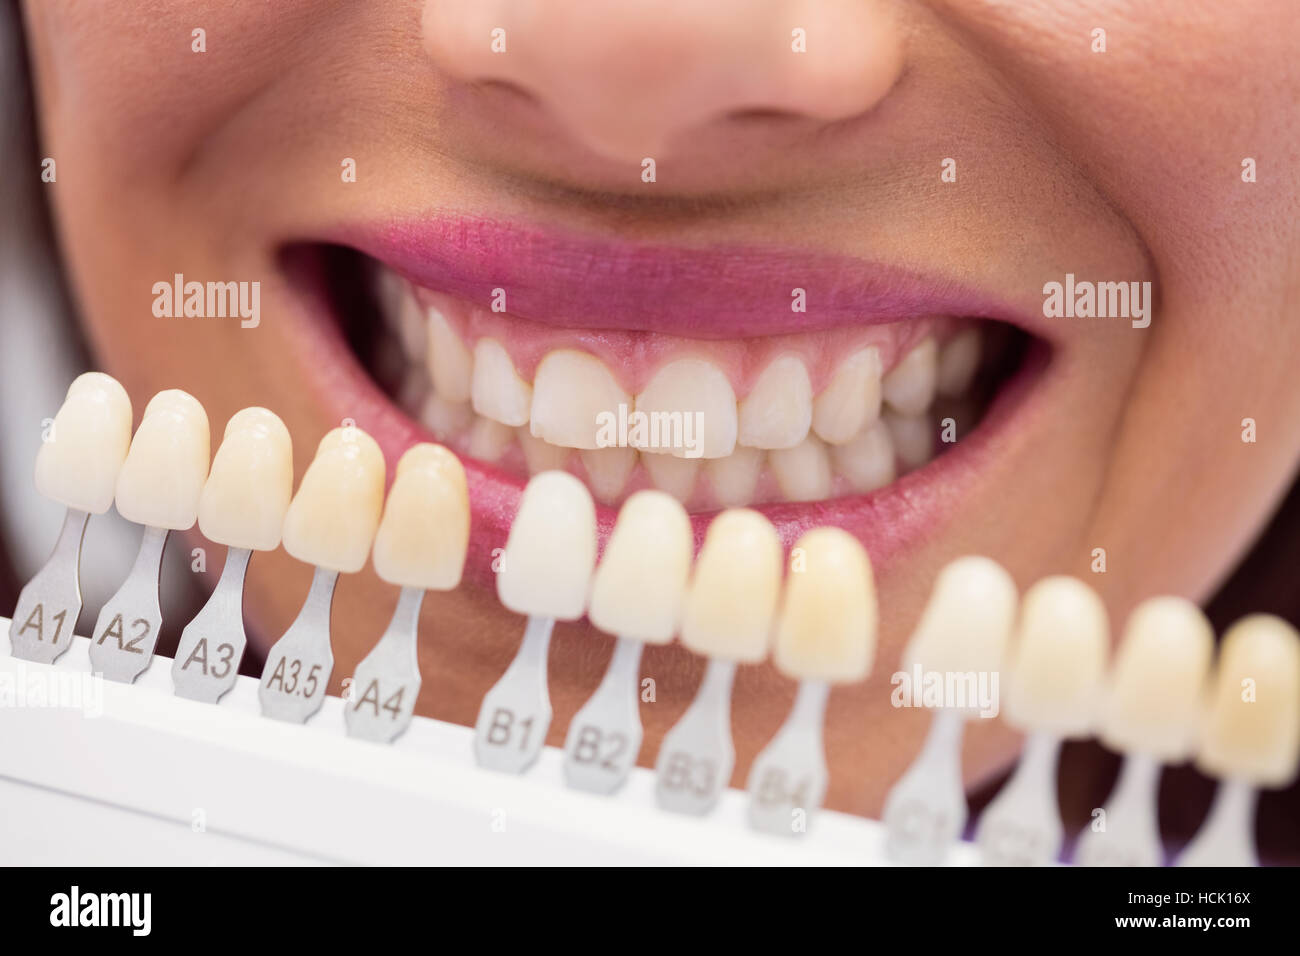 Tooth Shade Chart Printable